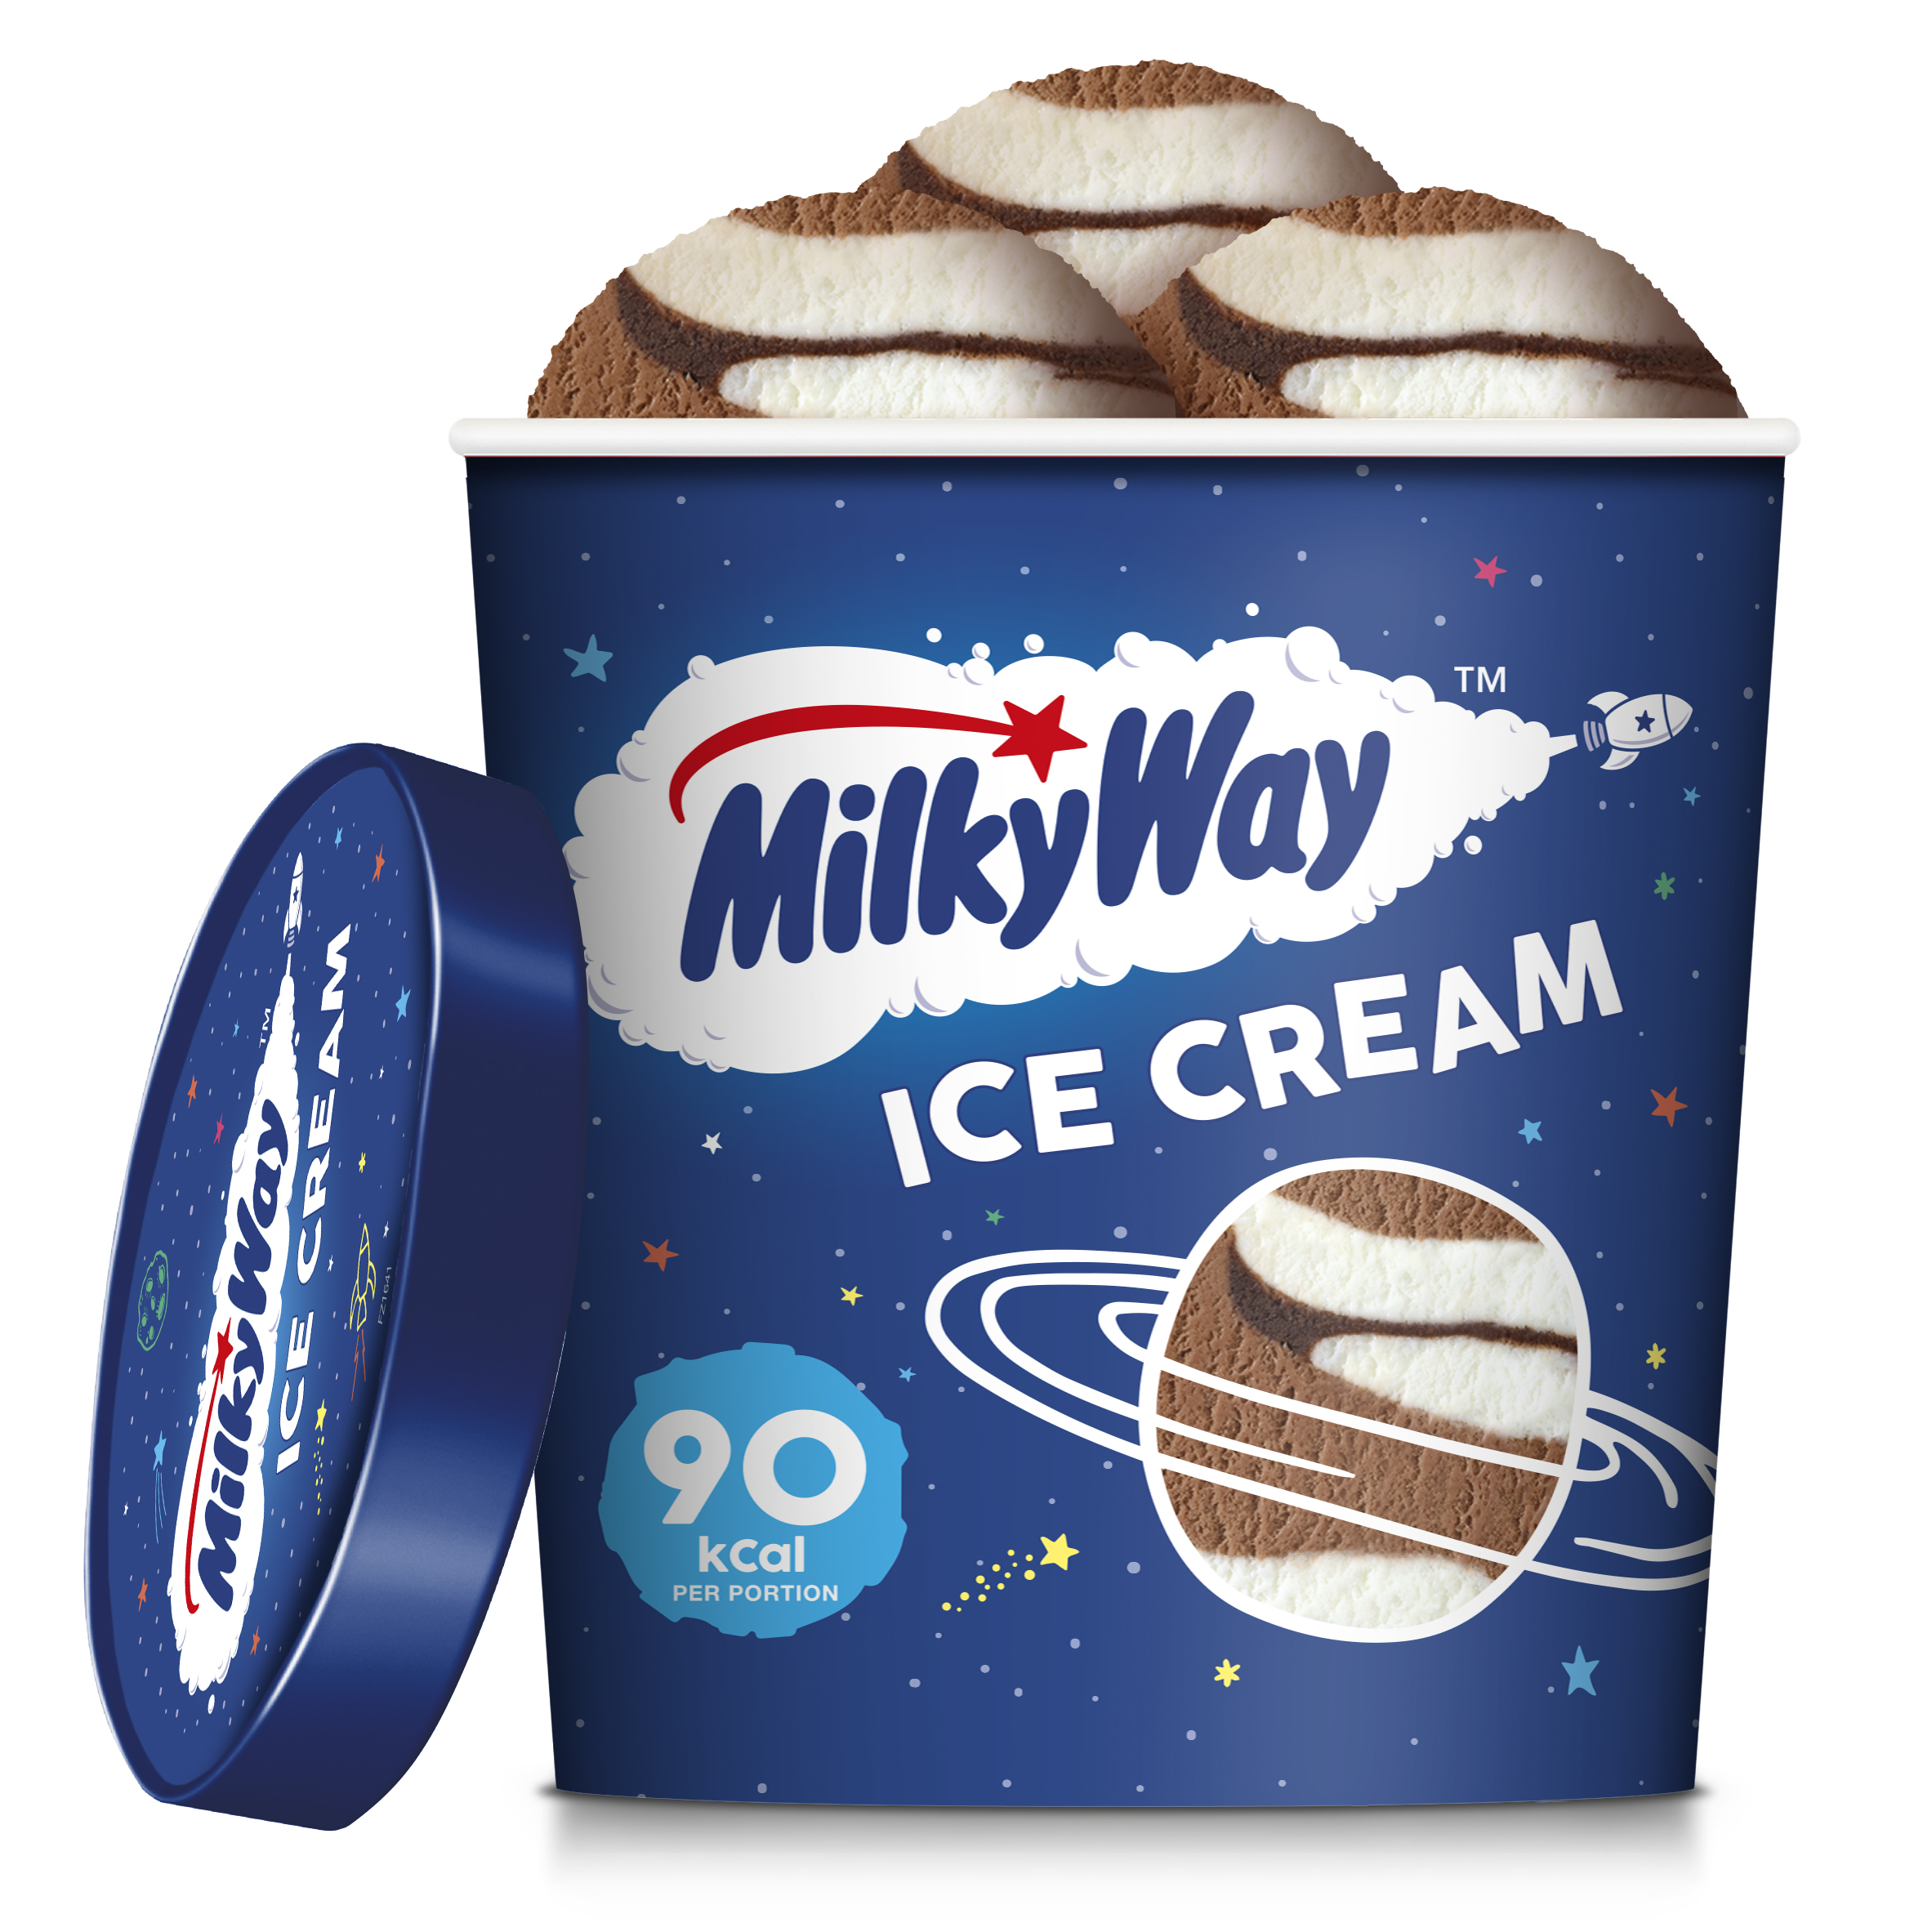 Introducing the new Milky Way ice cream tub